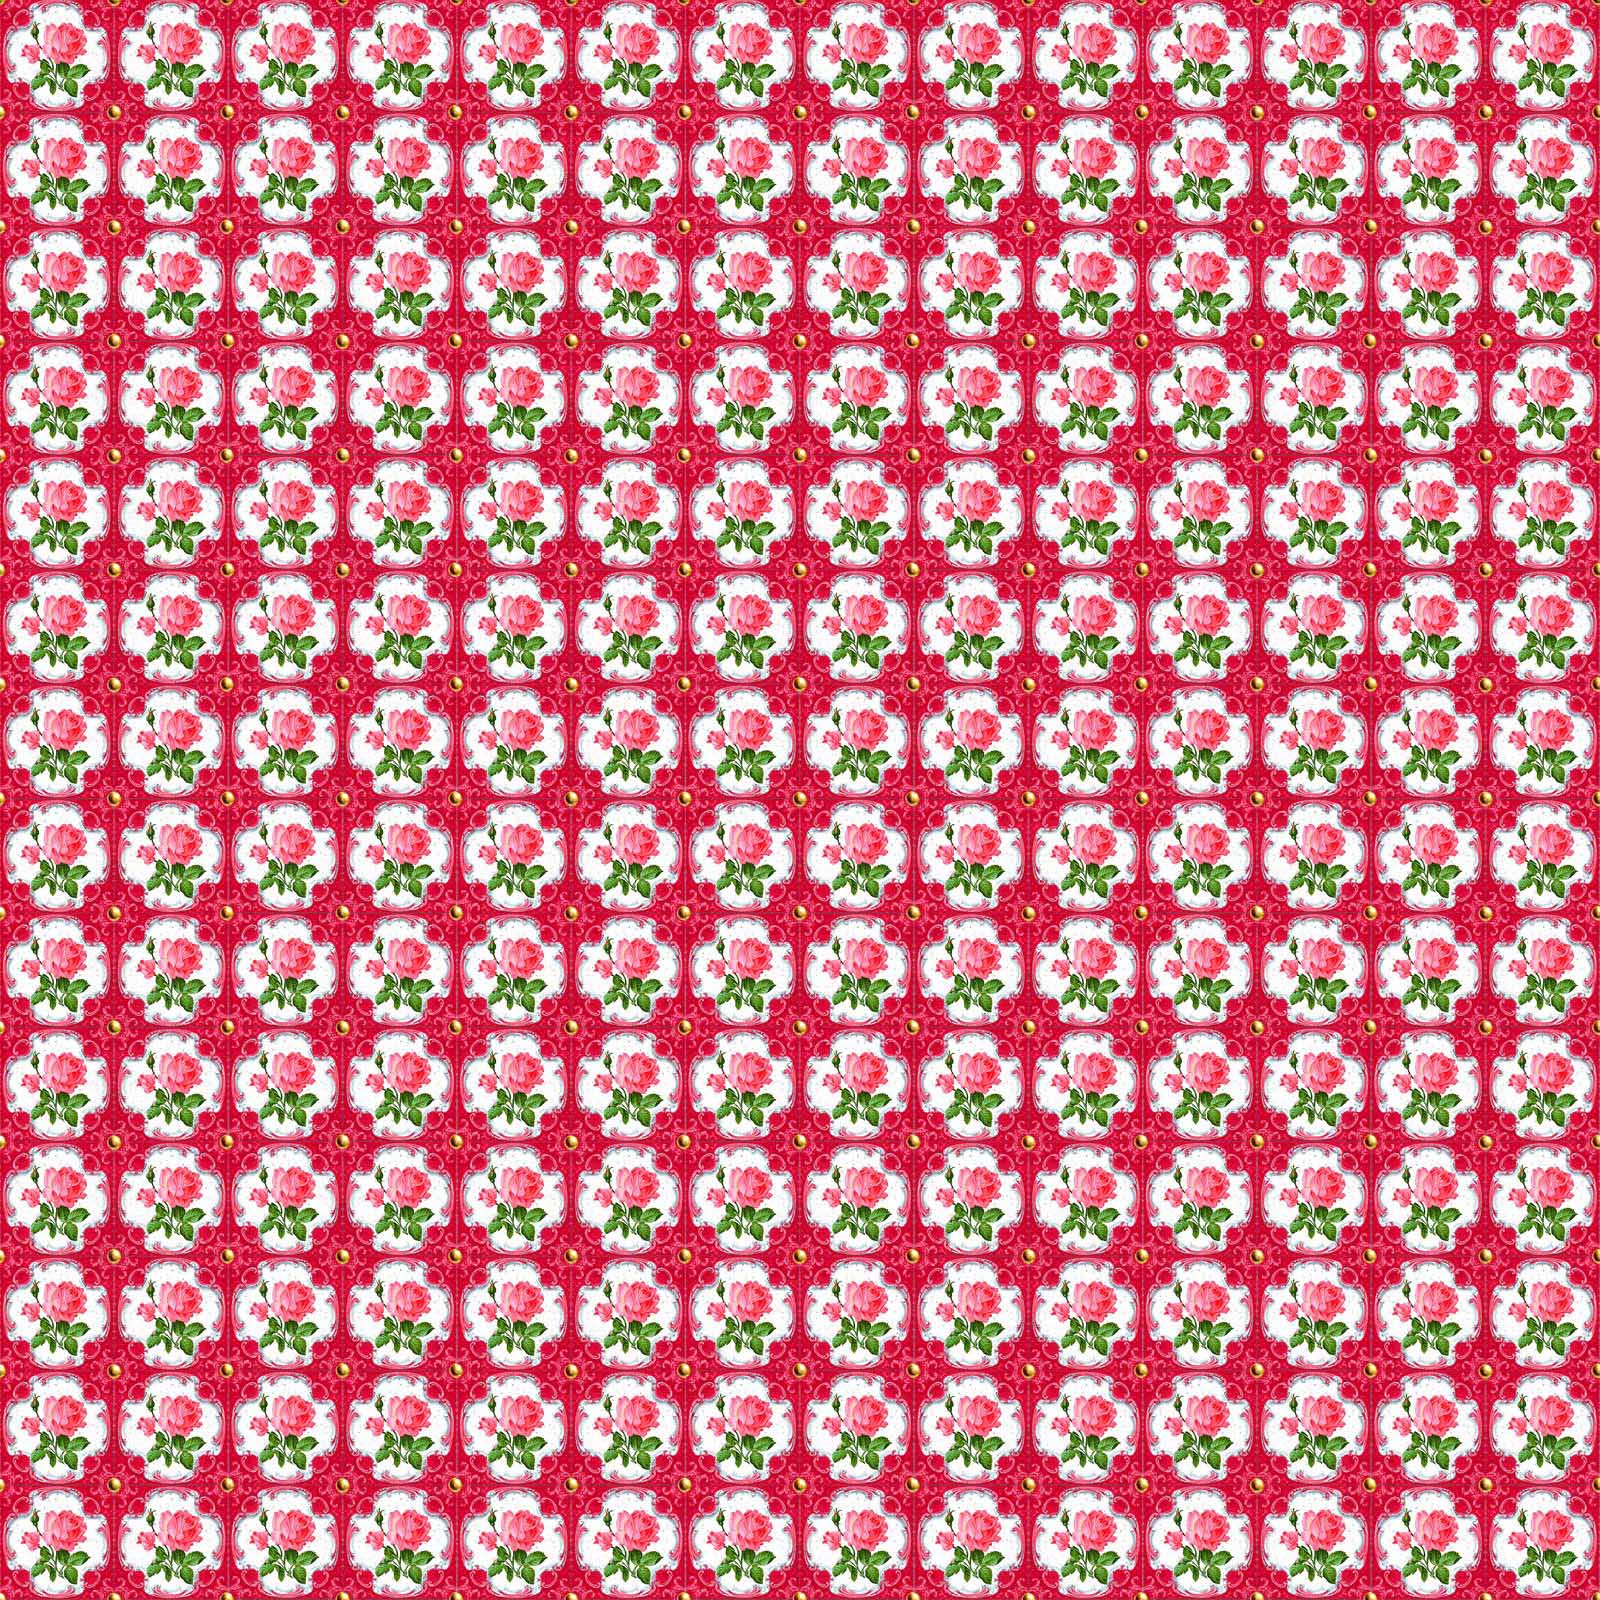 Vaessen Creative • CoCo-ton cotton fabric 45x50cm so cute pink floral pattern